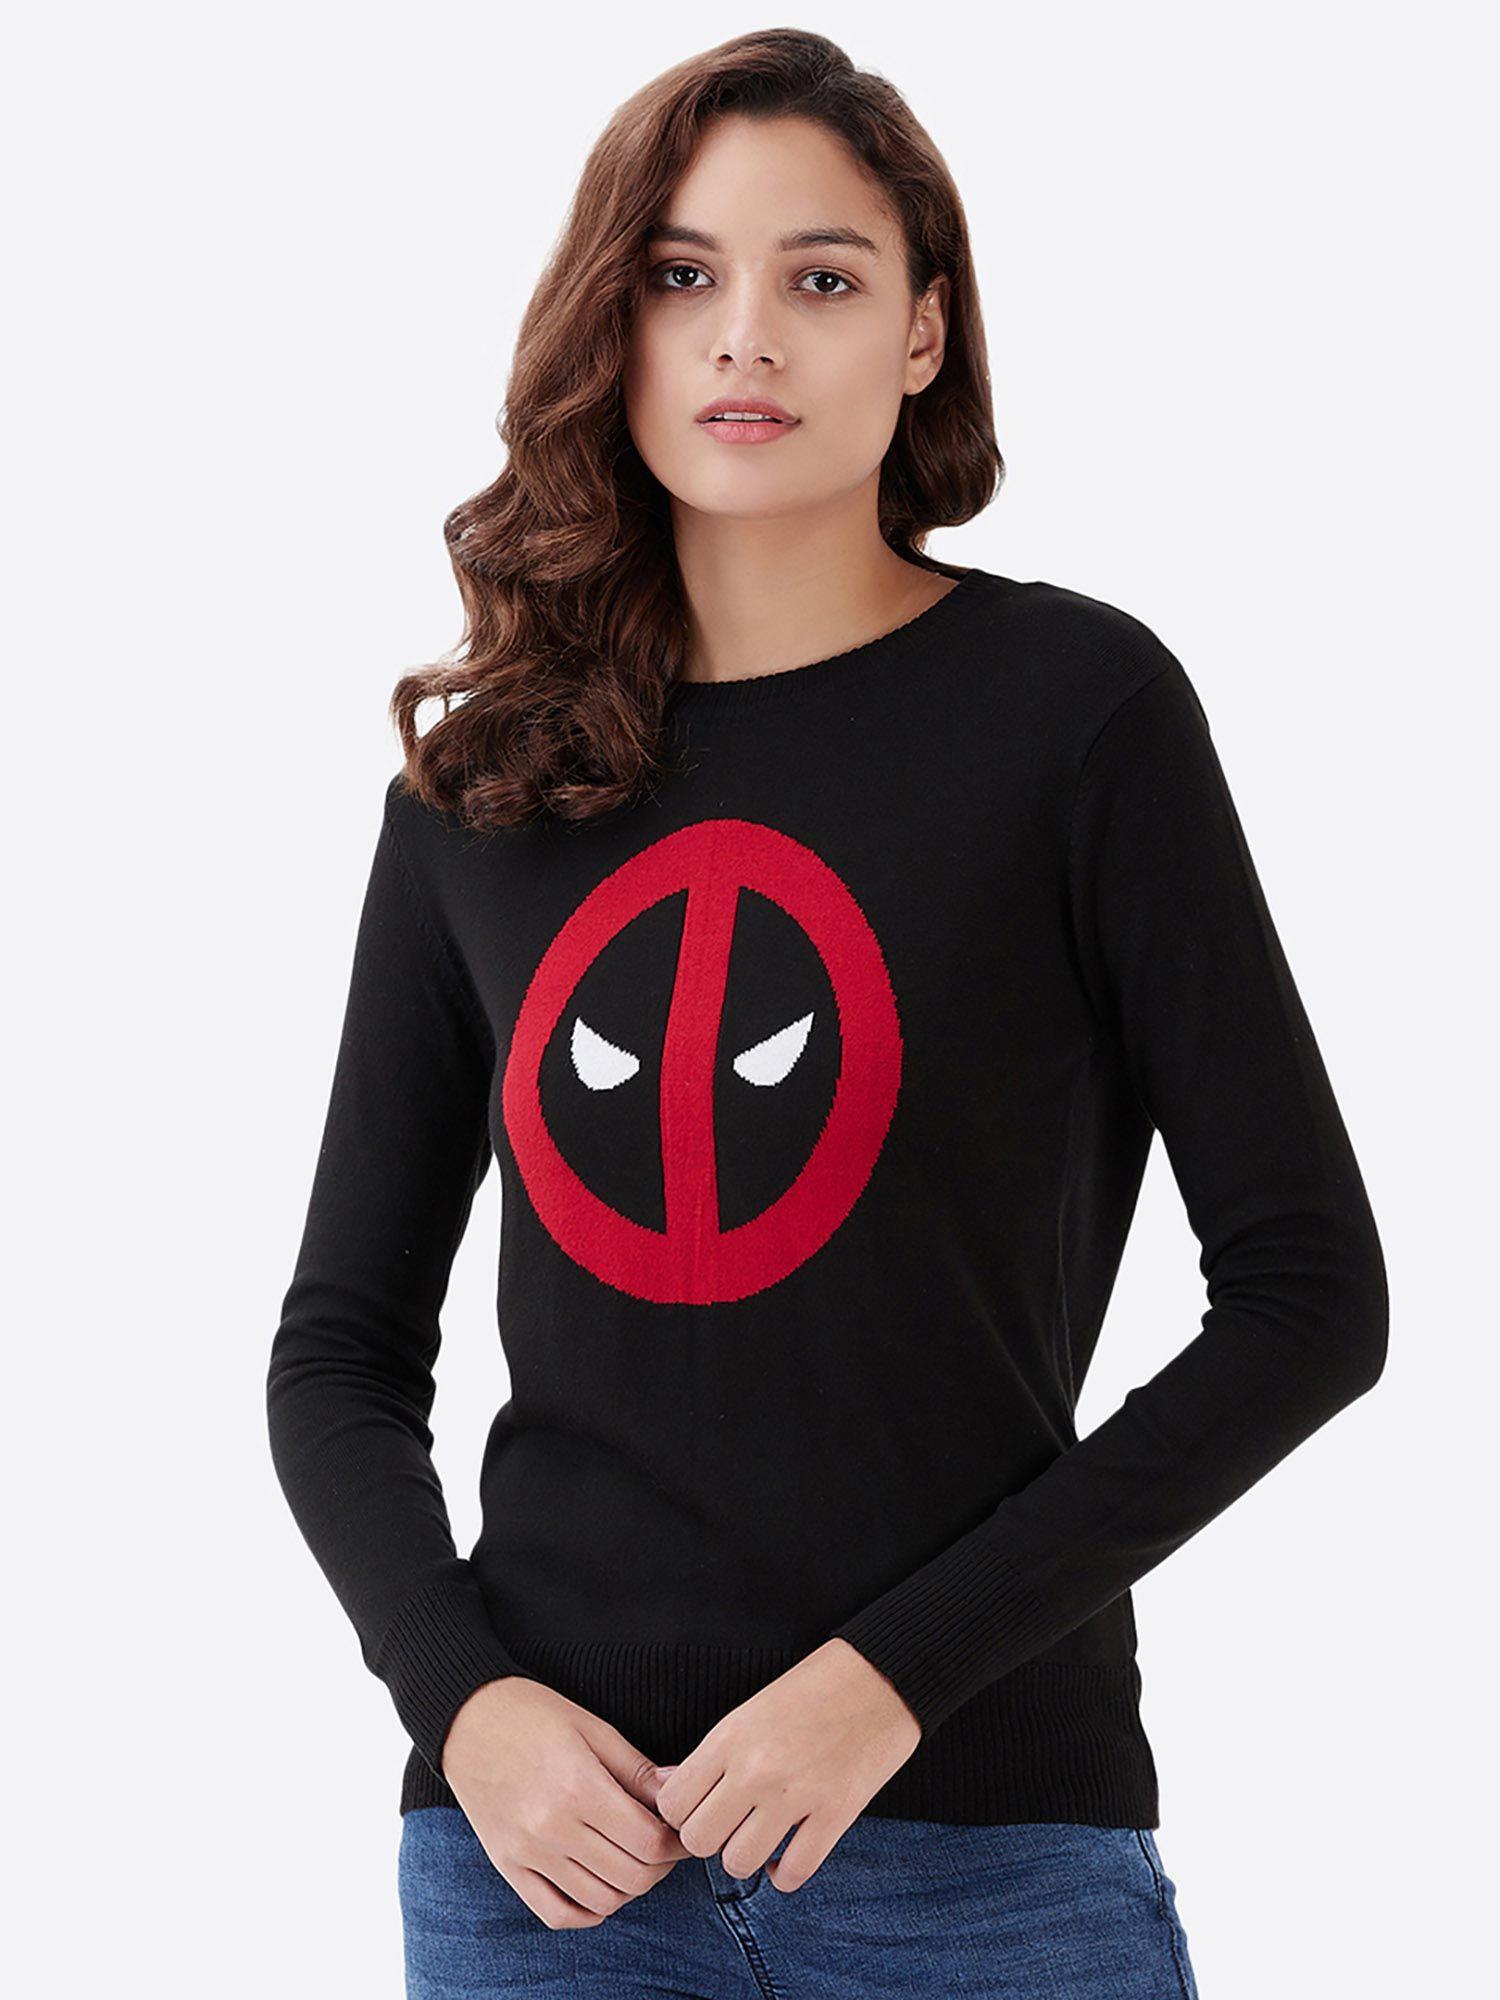 deadpool featured sweater for women